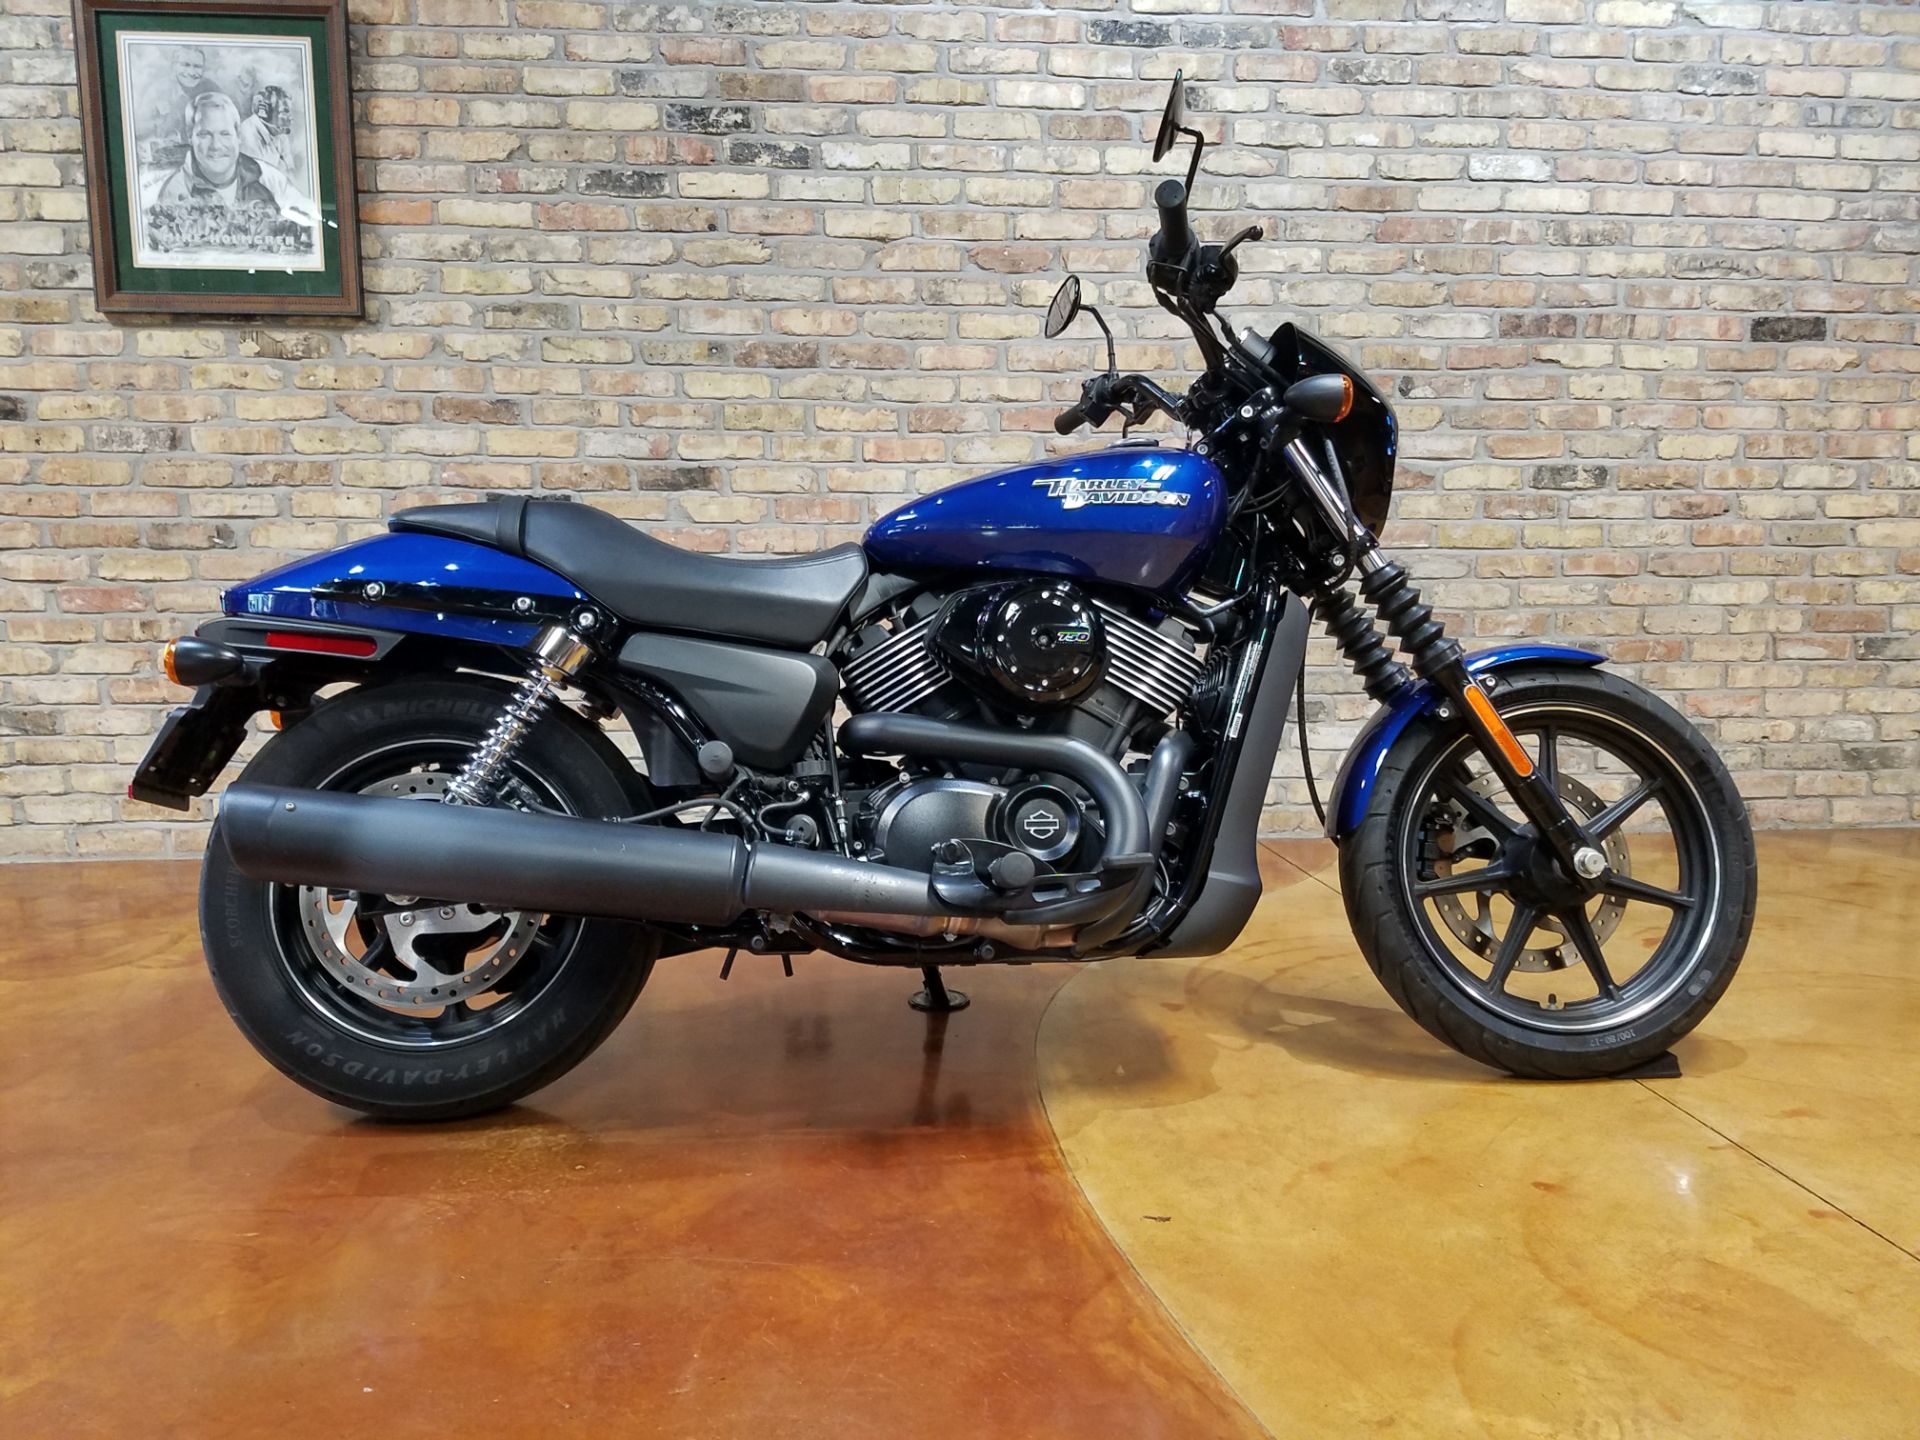 Used 2017 Harley Davidson Street 750 Motorcycles In Big Bend Wi 4439 Superior Blue